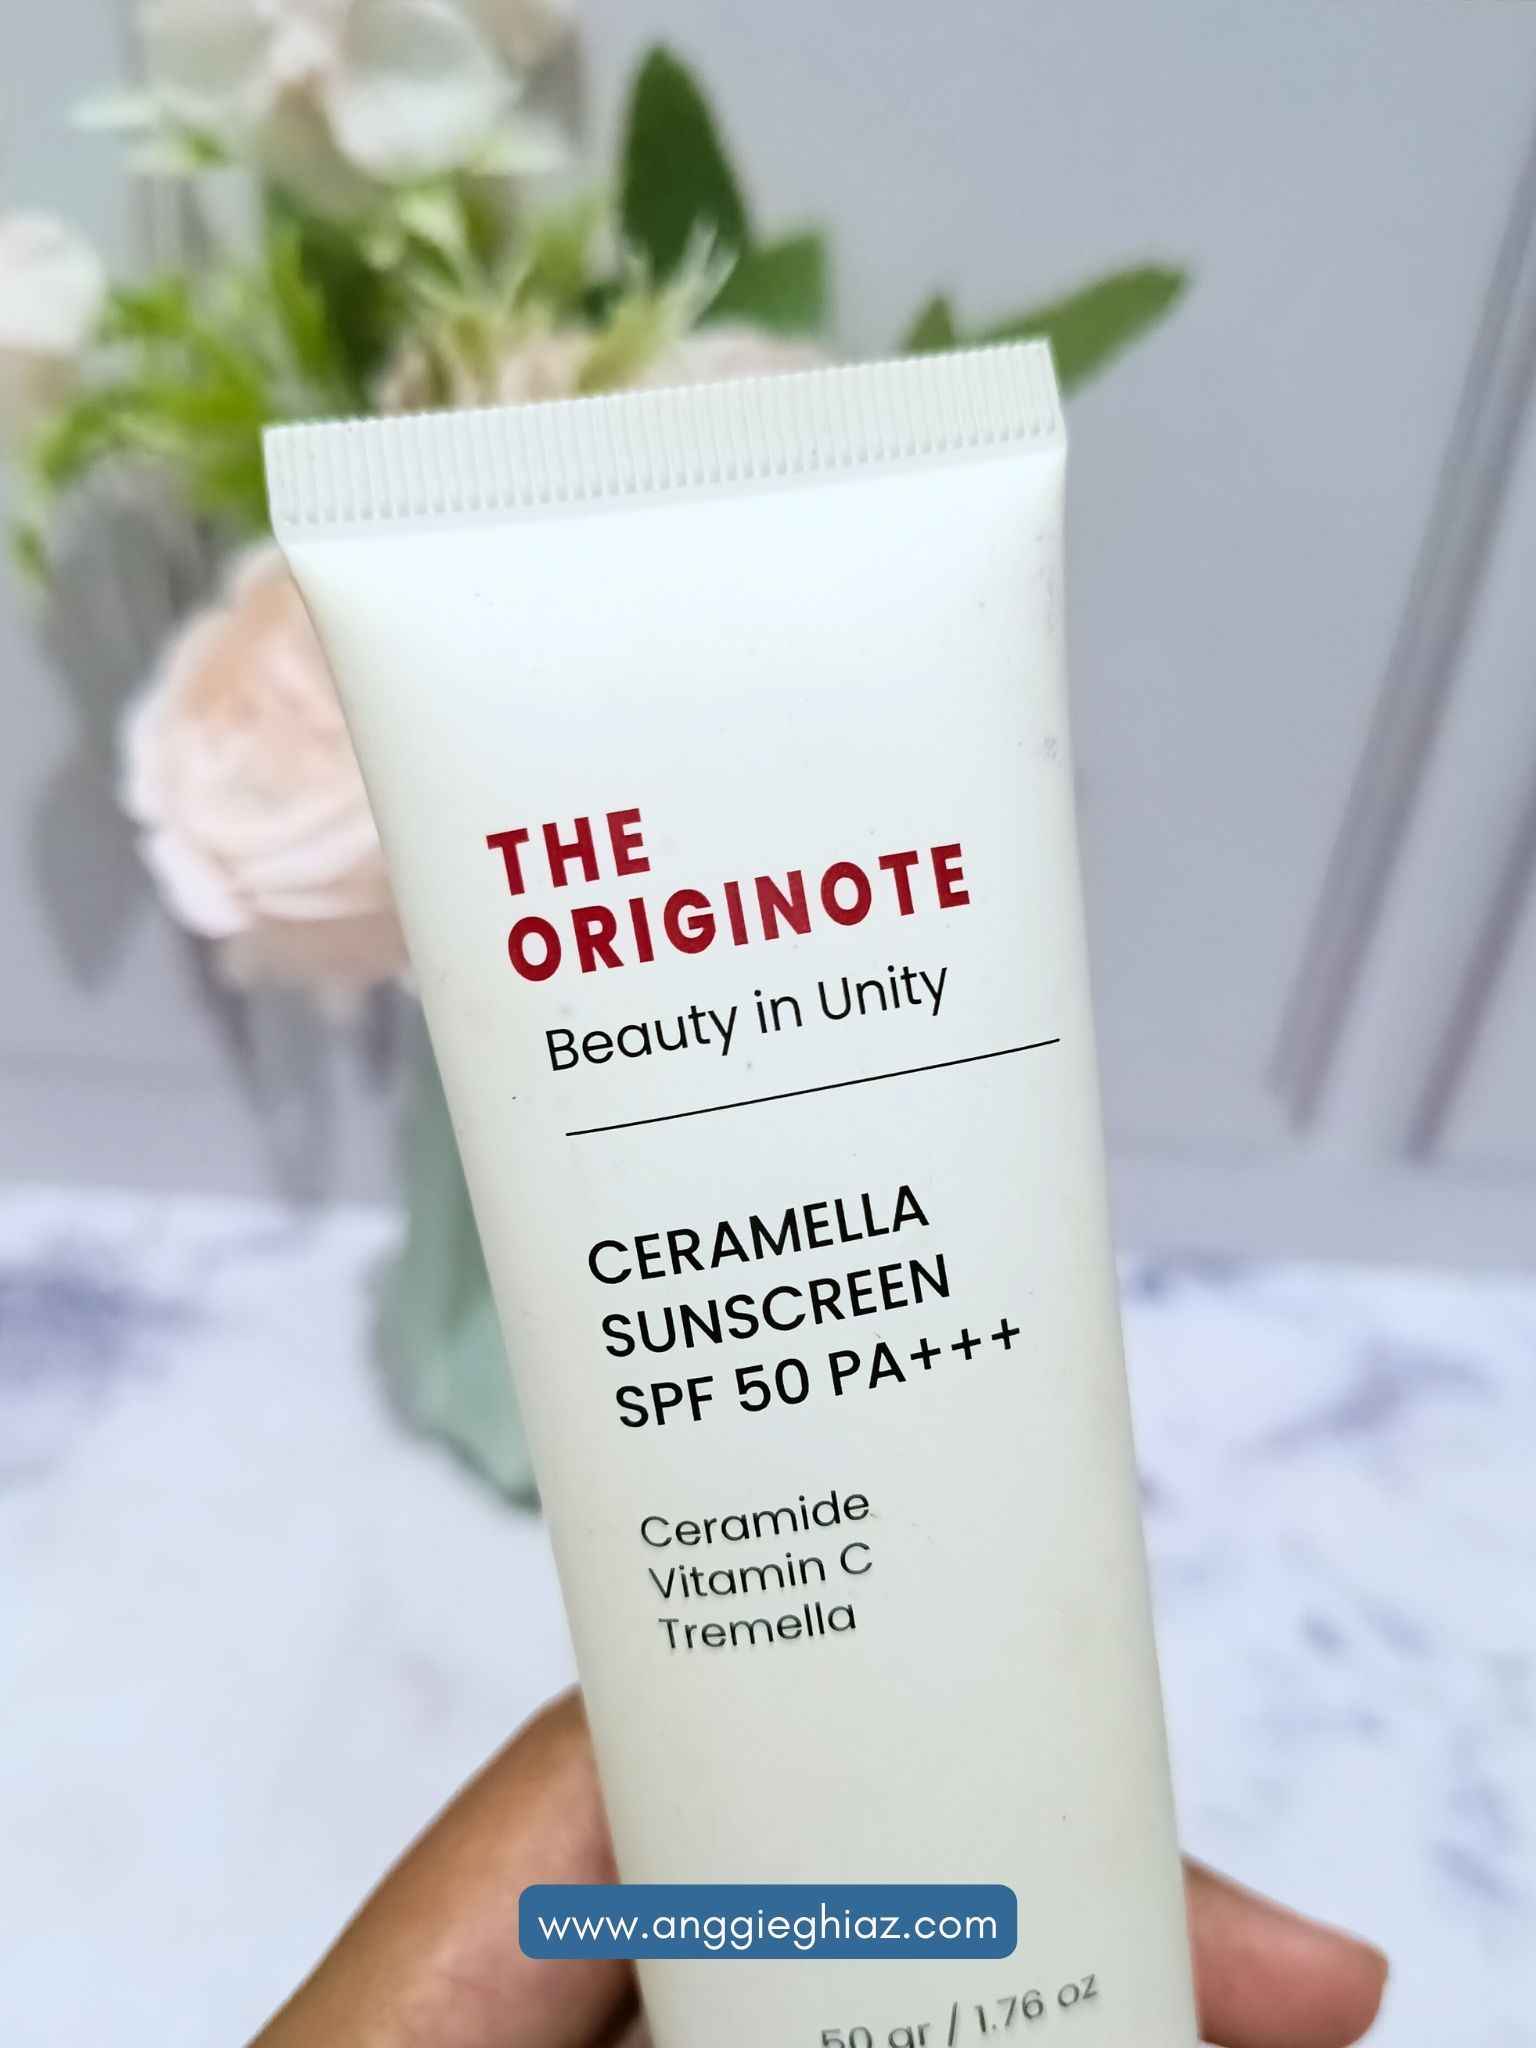 The Originote Ceramella Sunscreen